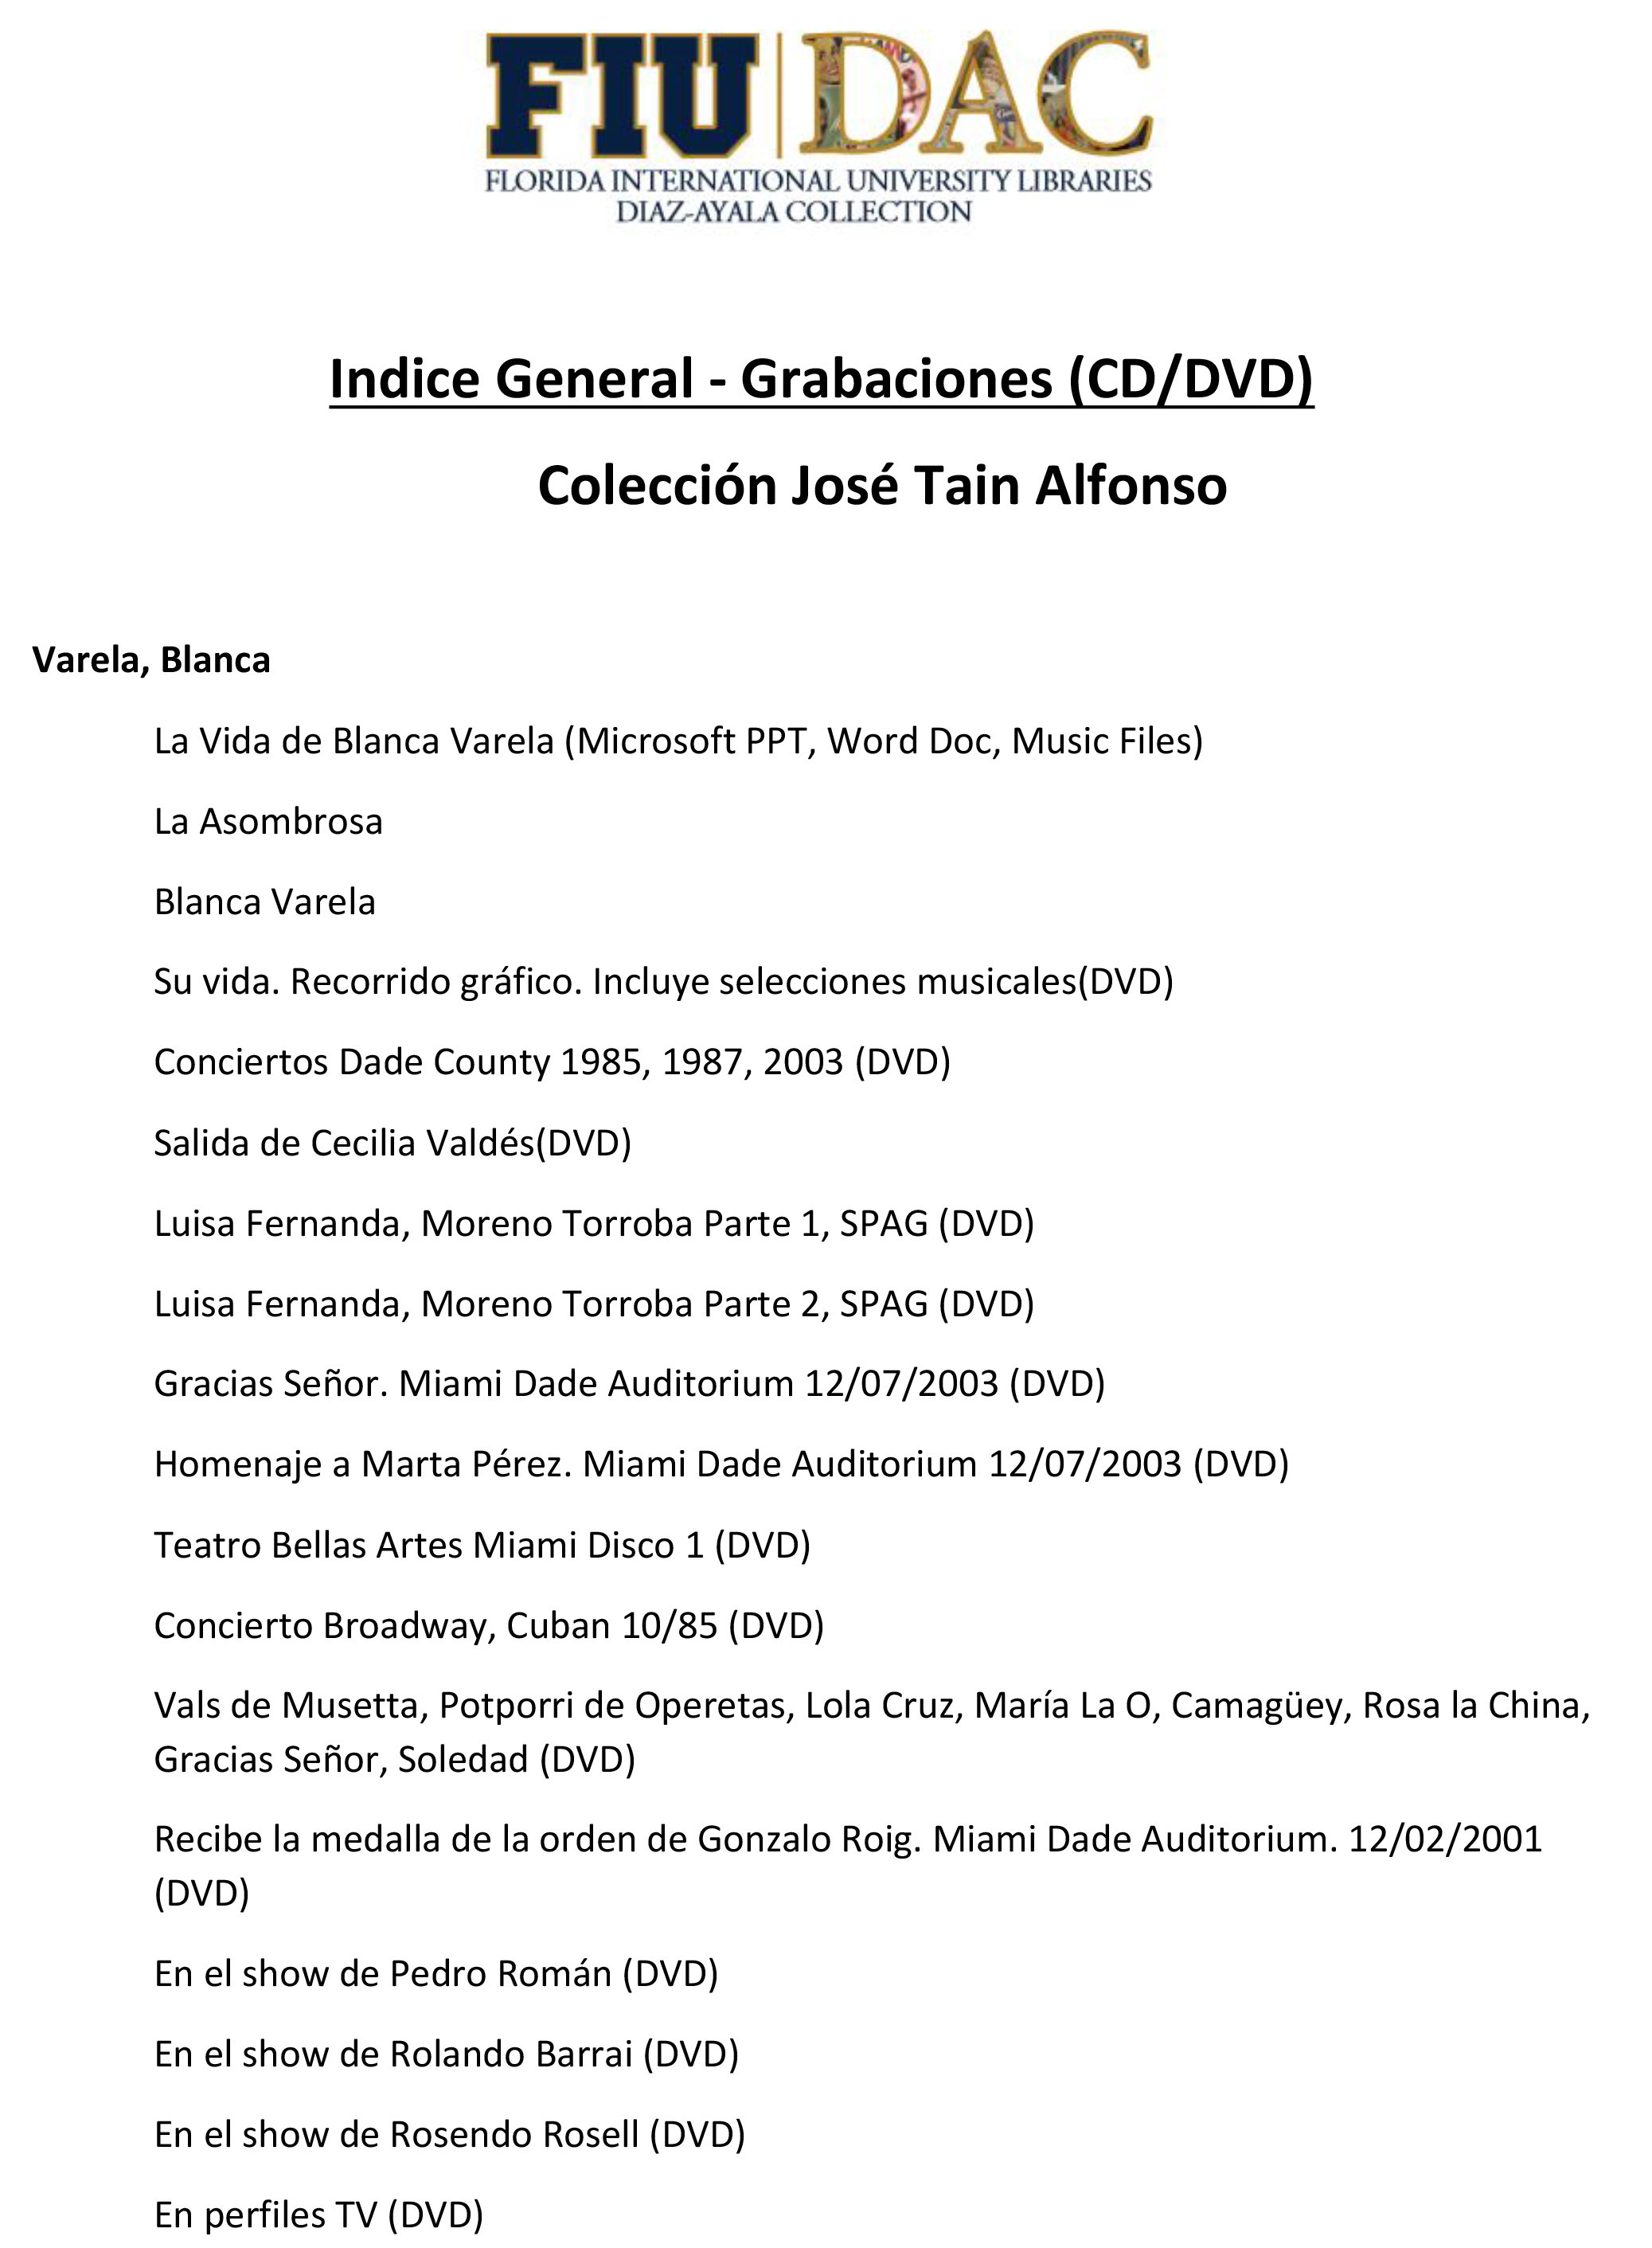 Jose Tain Aflonso Collection - Audio/Video File Index Parte 4 - Indice p.016